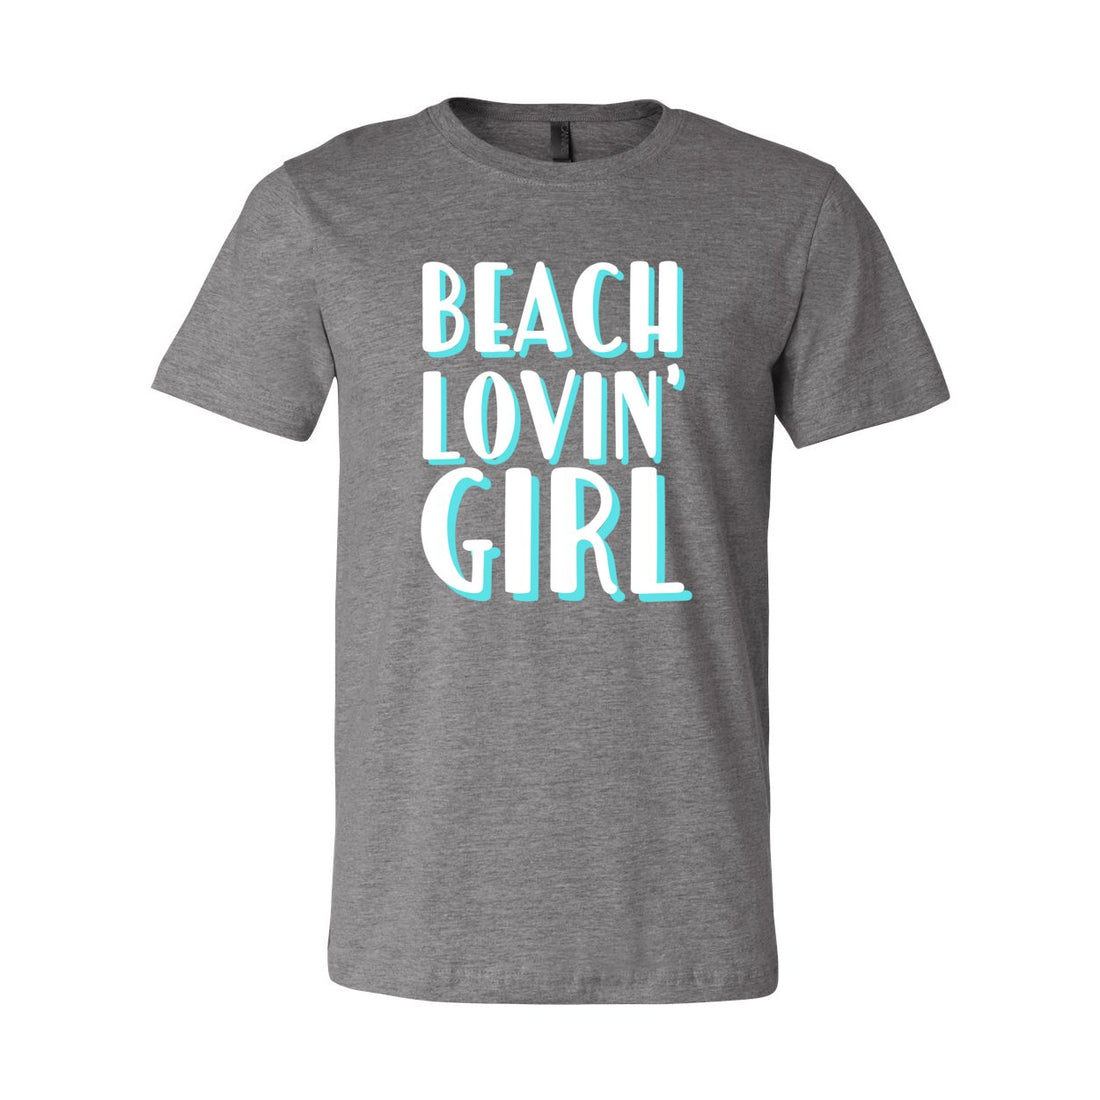 Beach Lovin' Girl Jersey Tee - T-Shirts - Positively Sassy - Beach Lovin' Girl Jersey Tee